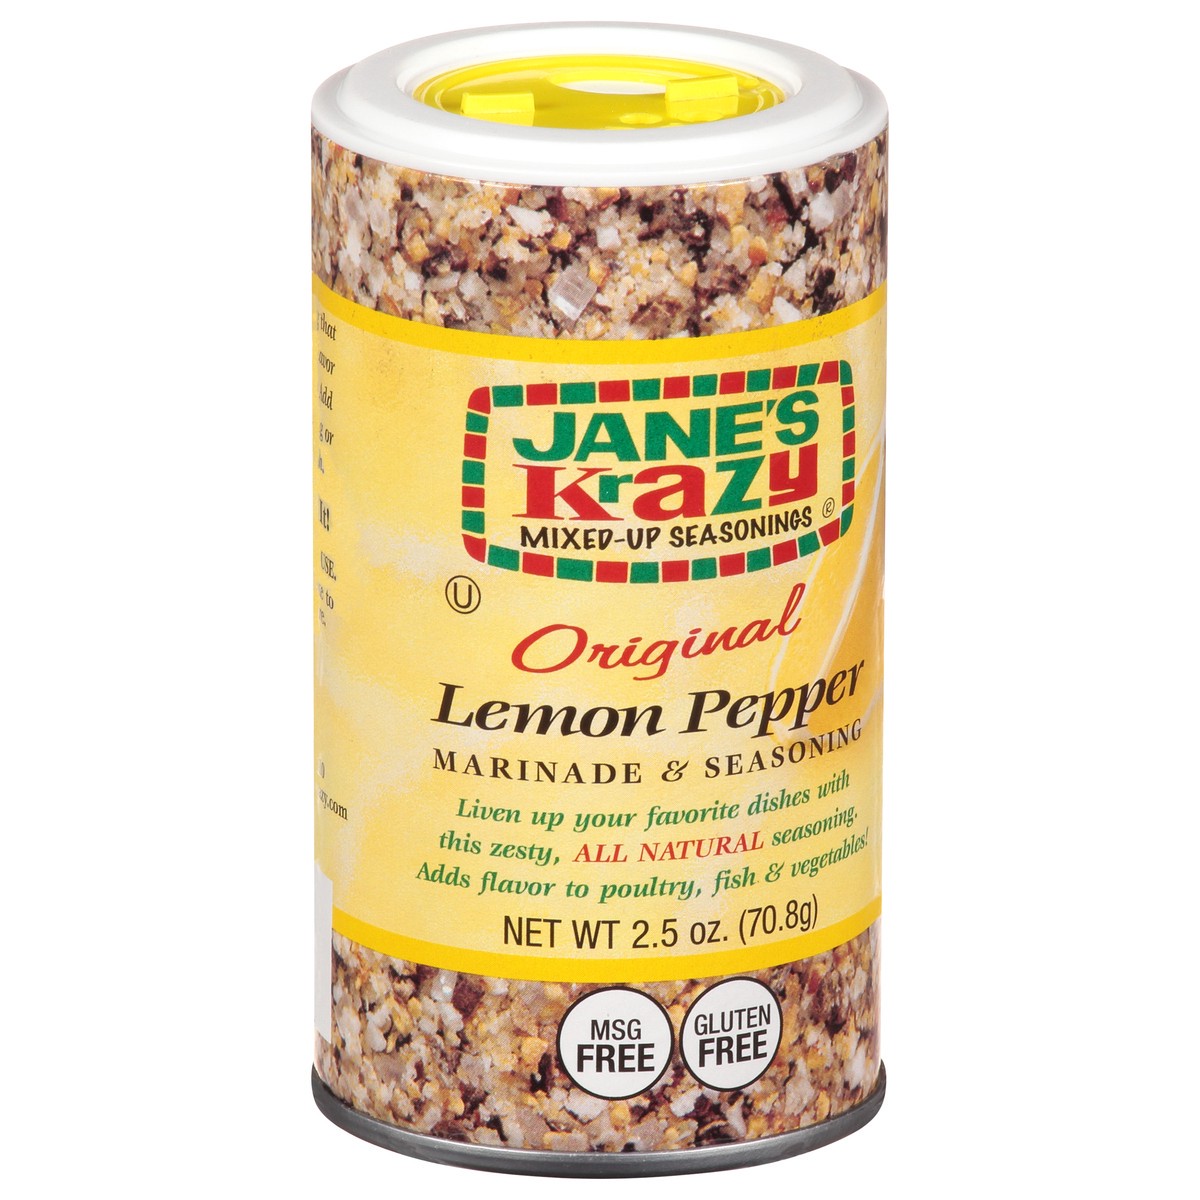 slide 10 of 12, Jane's Krazy Mixed-Up Seasonings Original Lemon Pepper Marinade & Seasoning 2.5 oz, 2.5 oz